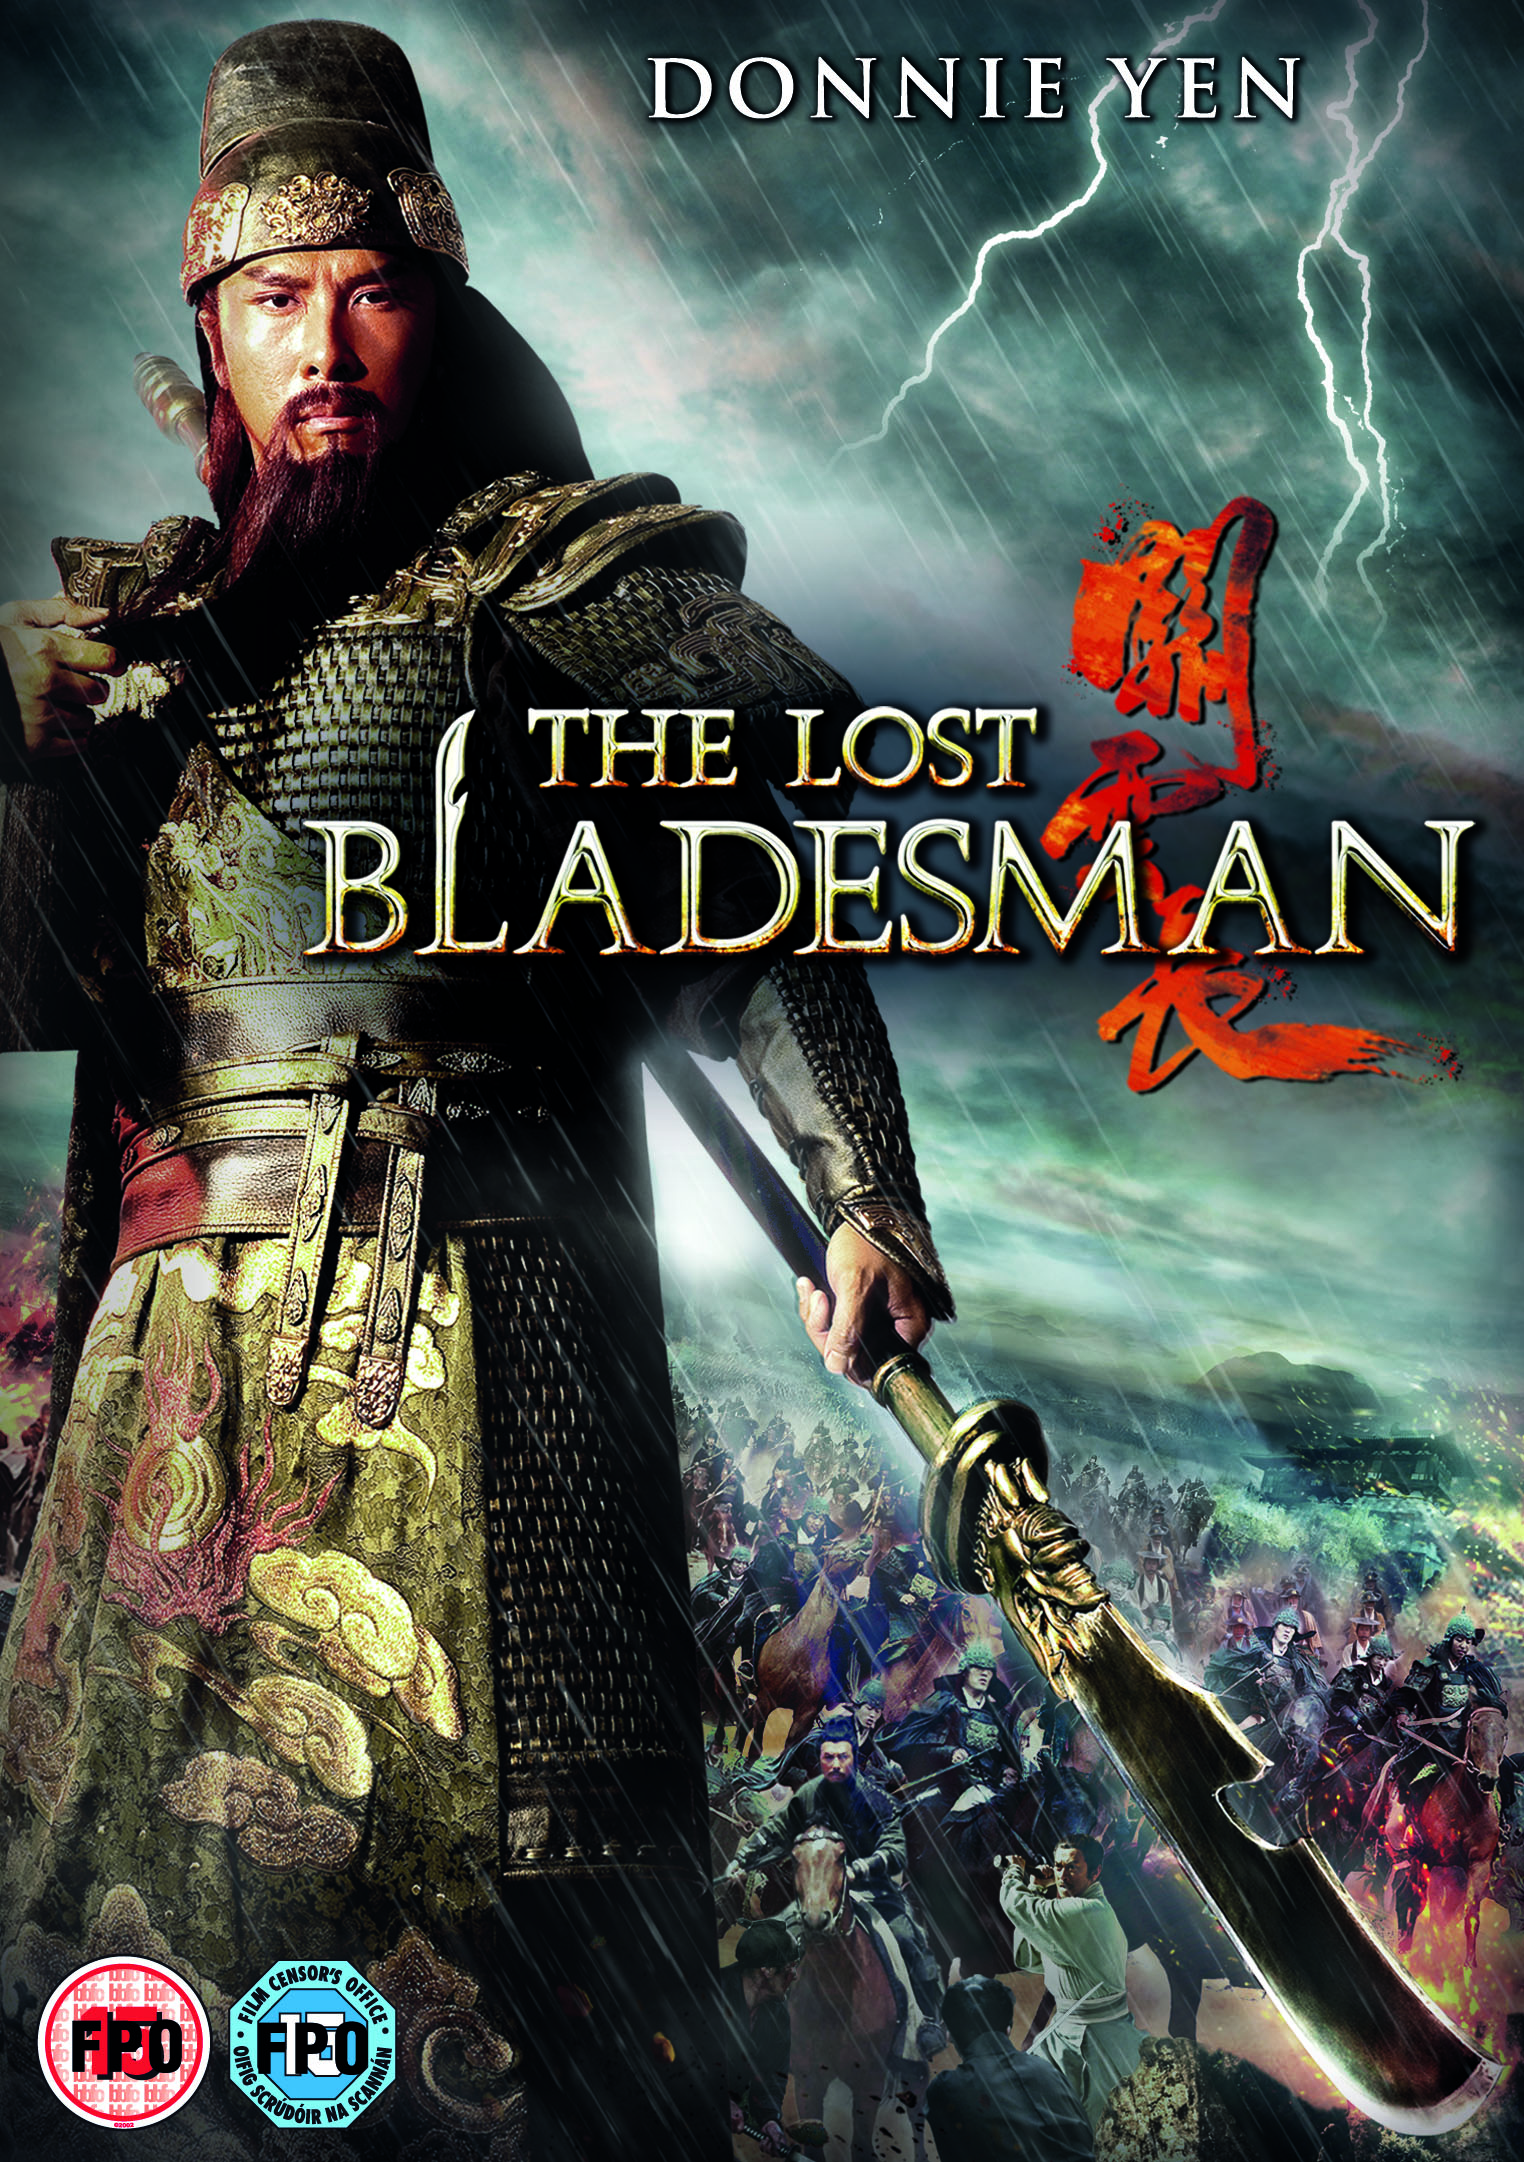 [Action-Historique] The lost Blademan The_lost_bladesman_thelostbladesman_2d_dvd